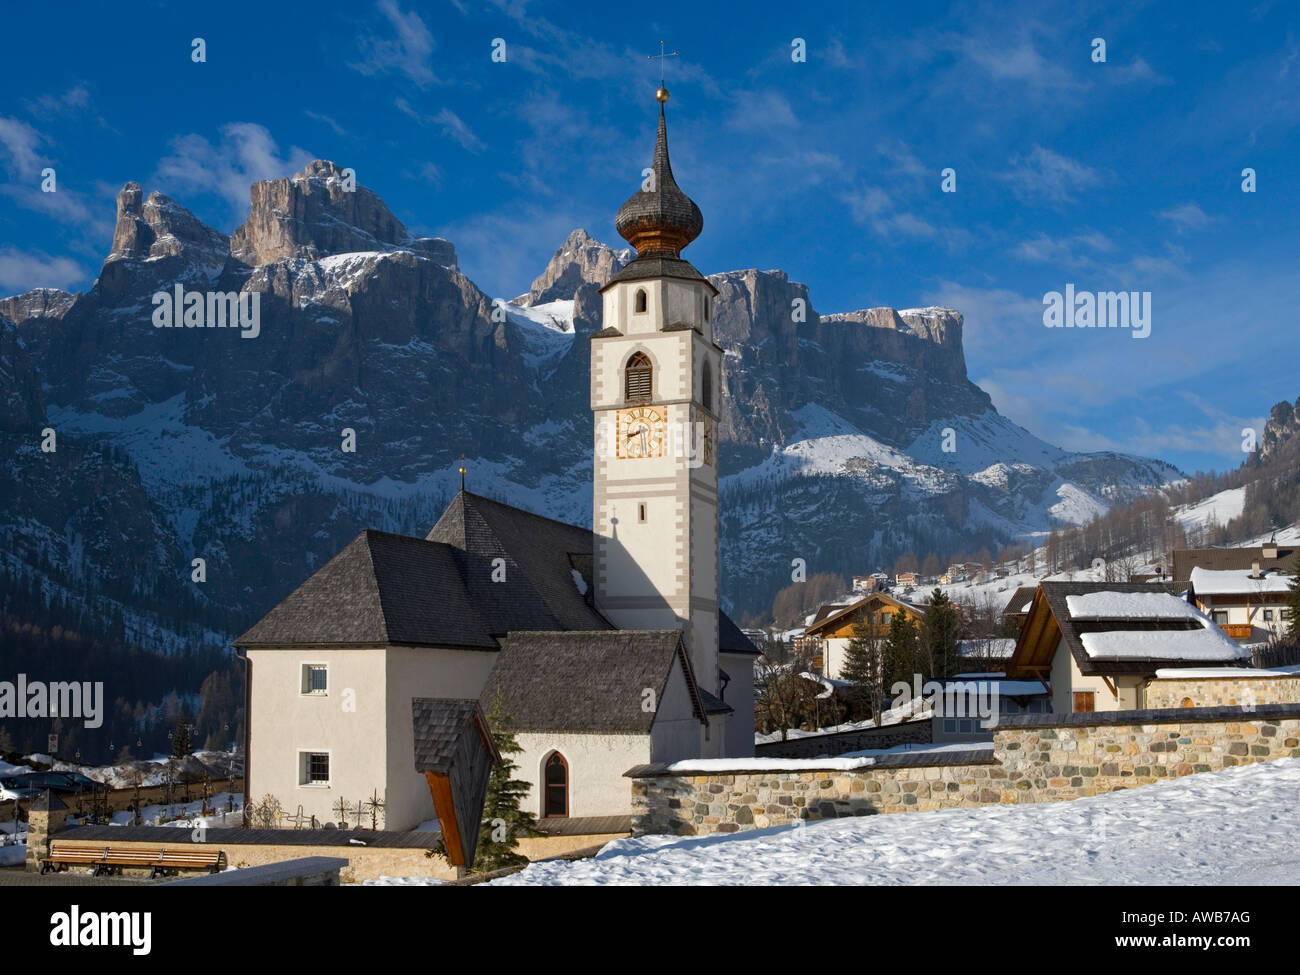 Kirche im Dorf Kolfuschg im Winter Schnee, Dolomiten, Italien. Stockfoto